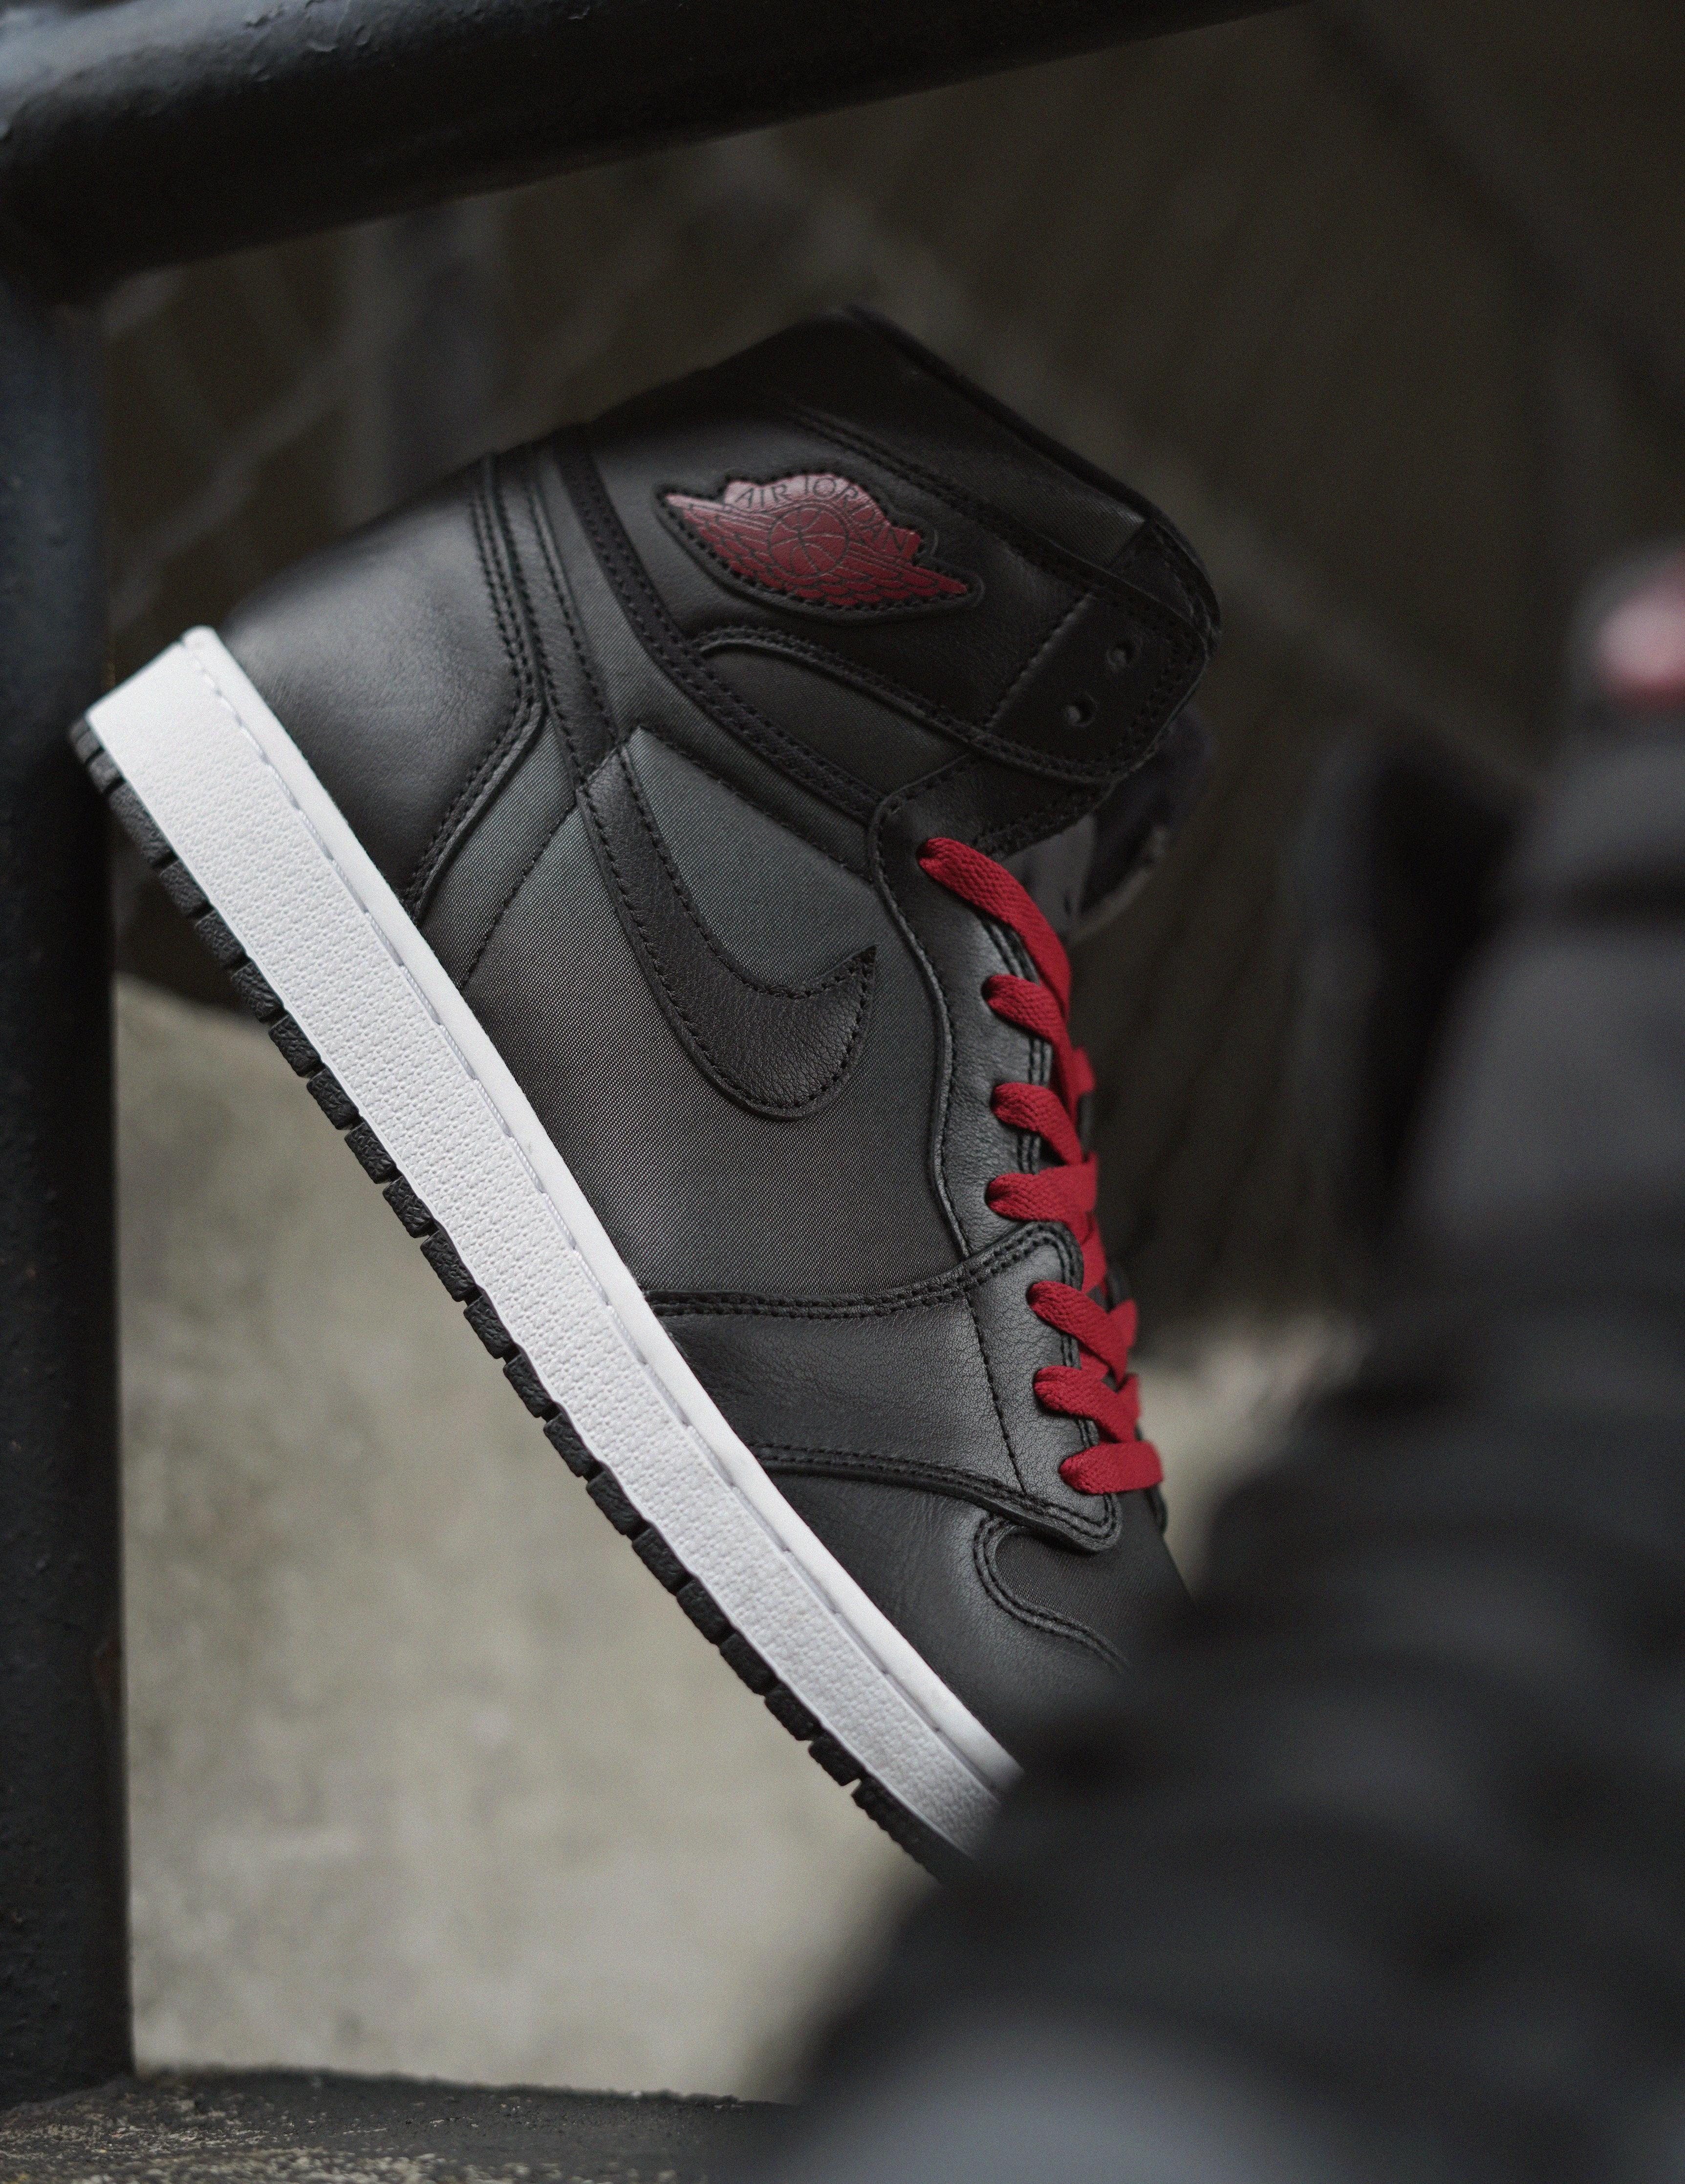 Sneakers Release – Air Jordan Retro 1 High OG “Black Satin” Black/Red